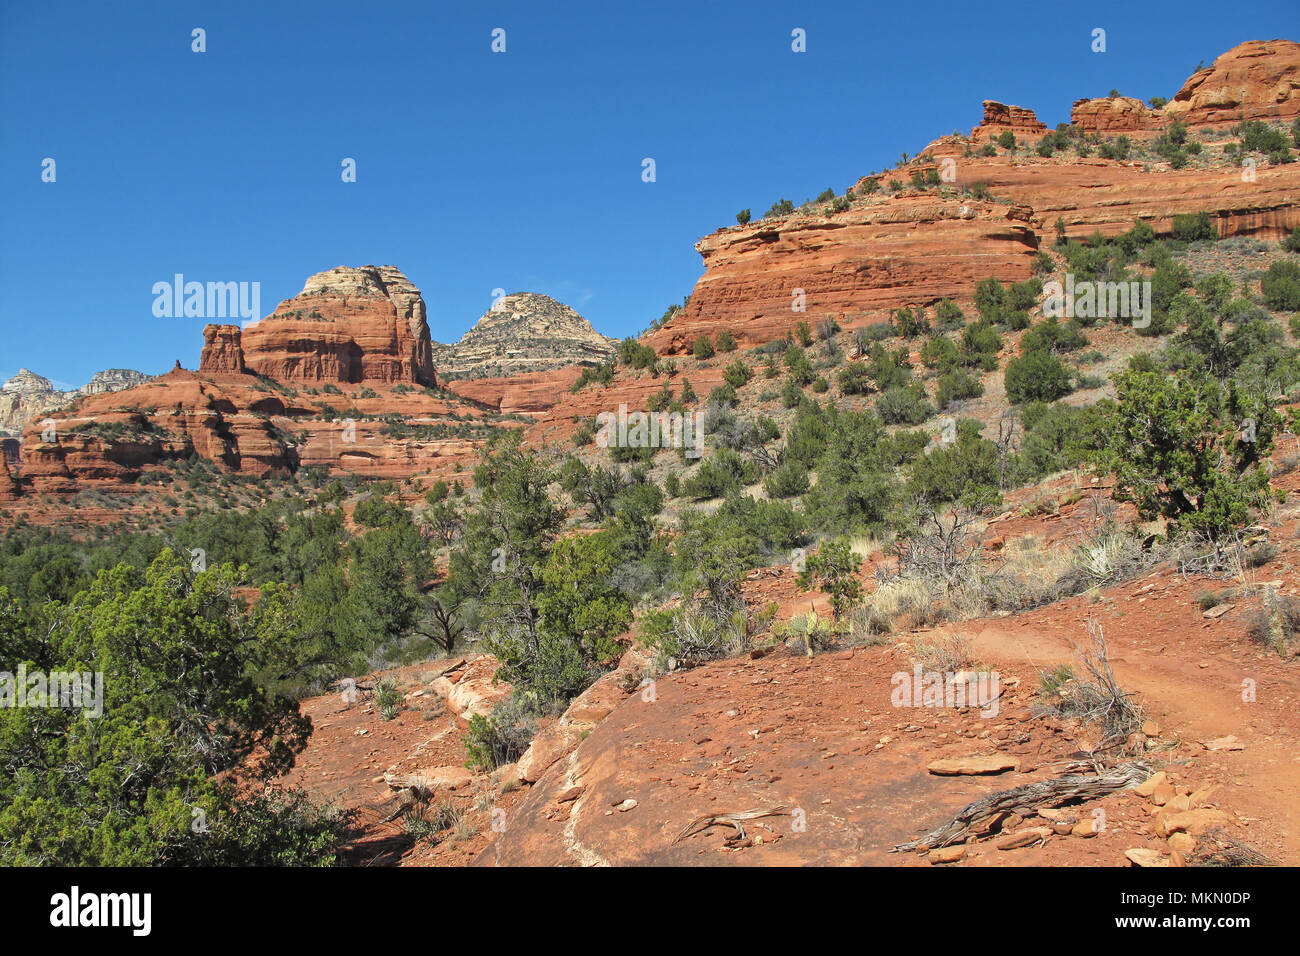 Famous Red Rock landscape, Sedona, Arizona, USA. Stock Photo